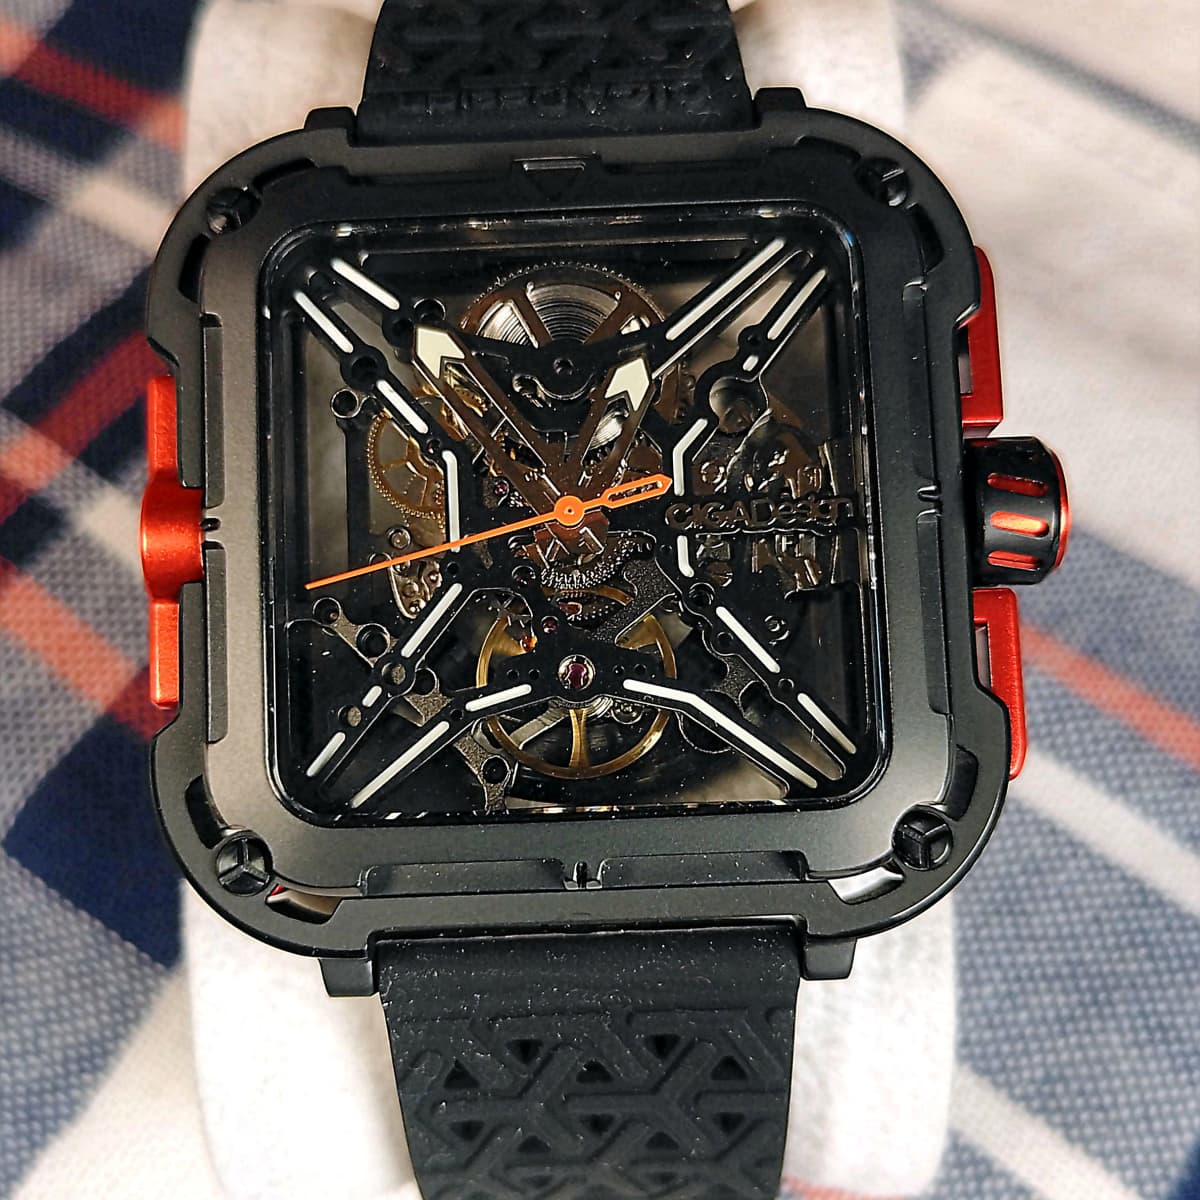 CIGA Design MY Series titanium mechanical skeleton watch review - The  Gadgeteer | Wrist watch design, Skeleton watch, Watch review